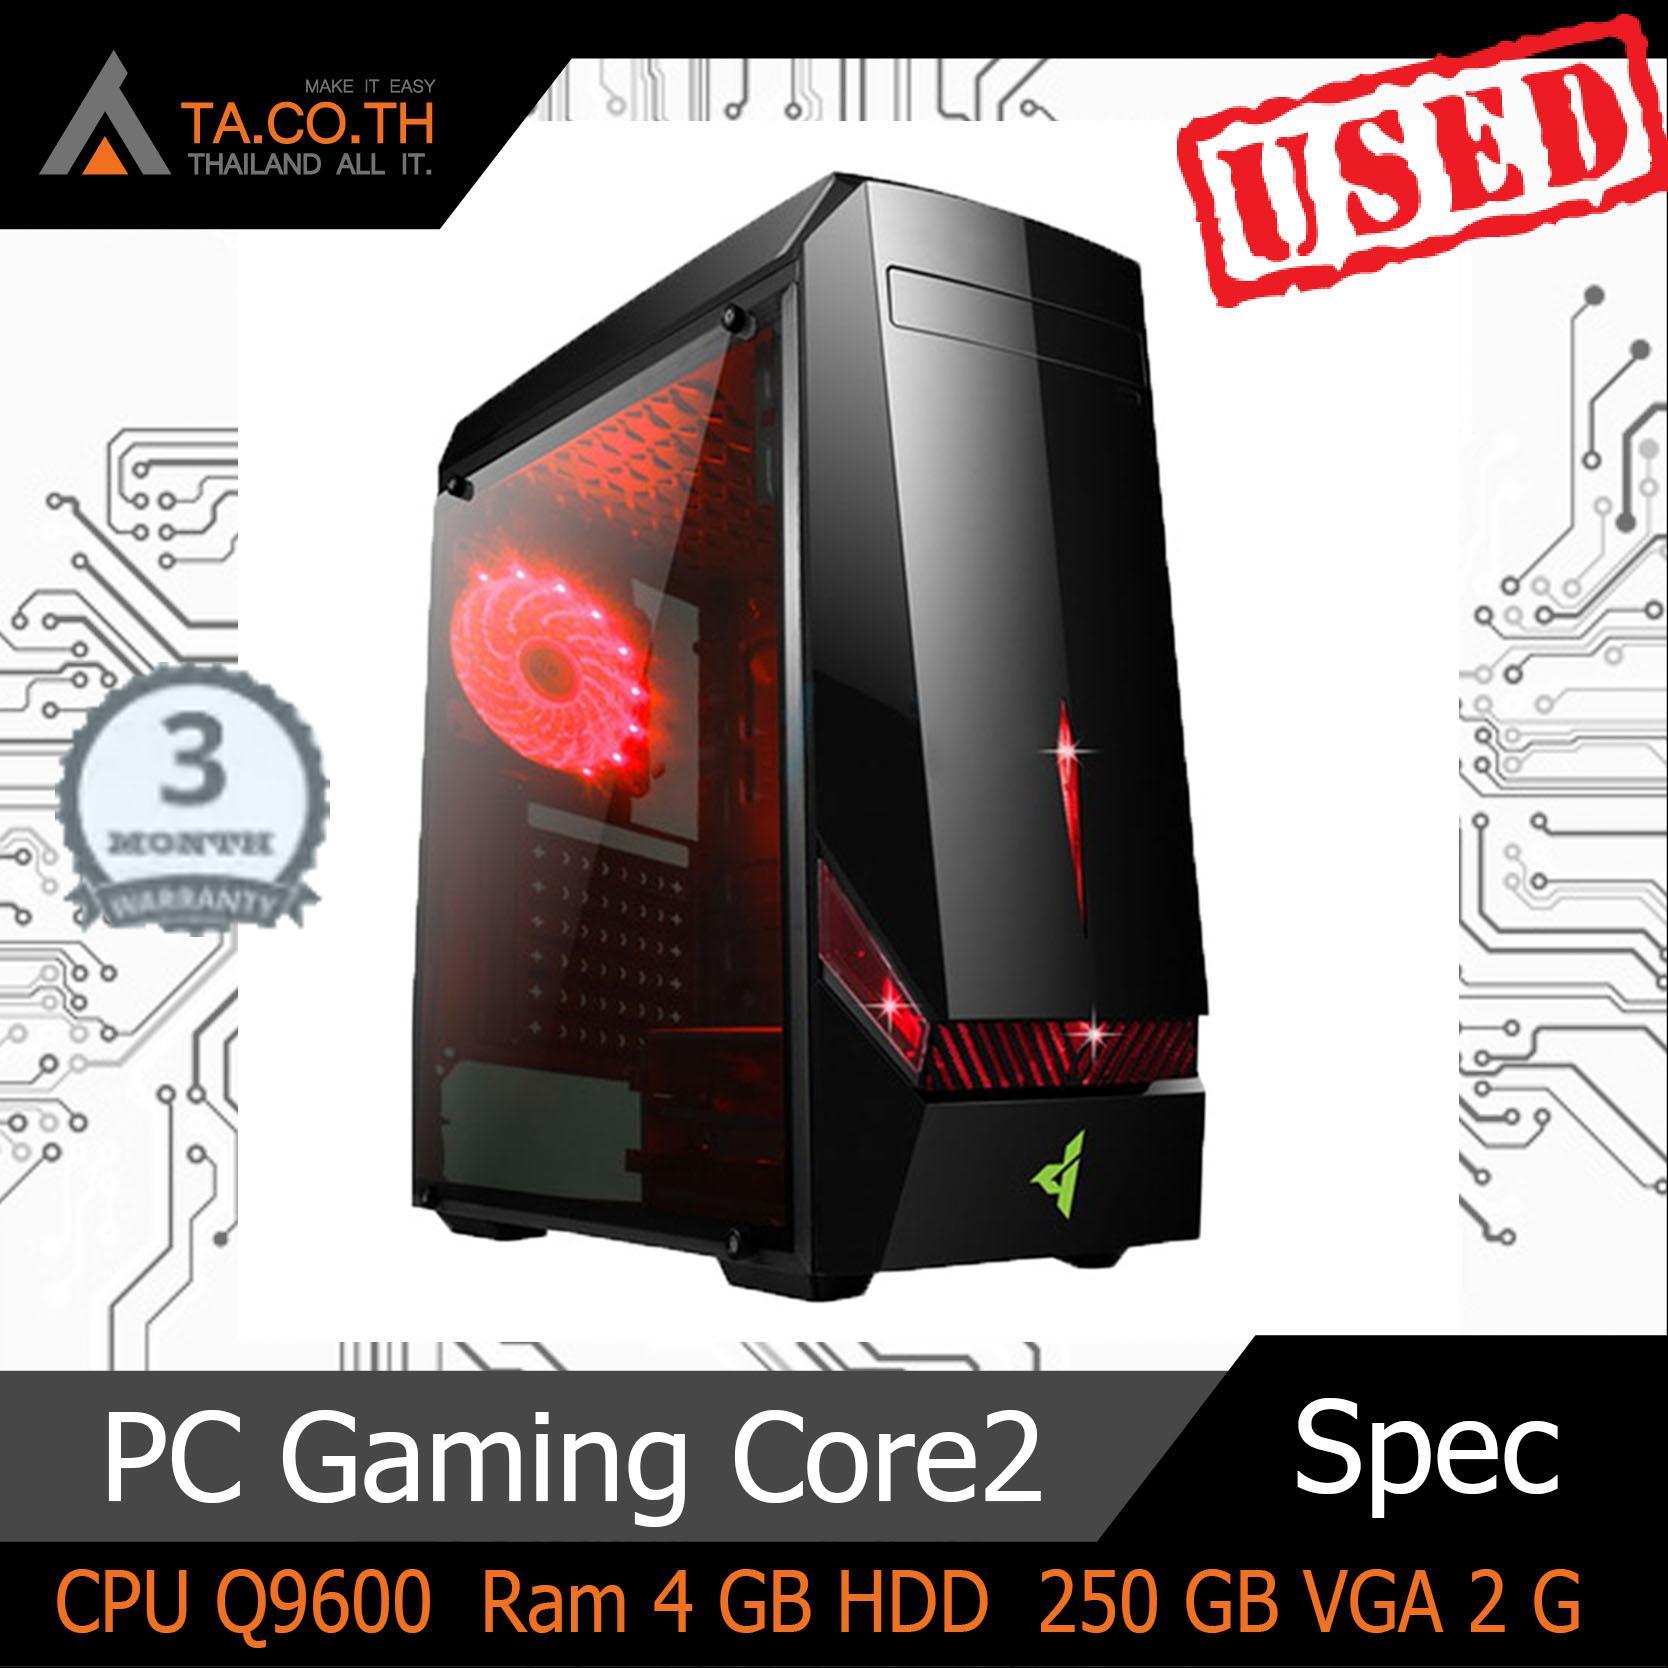 PC Gaming Core2 ราคาประหยัด ใช้สำหรับเล่นเกมส์ PUBG LITE GTAV HON PB SF FIFA4